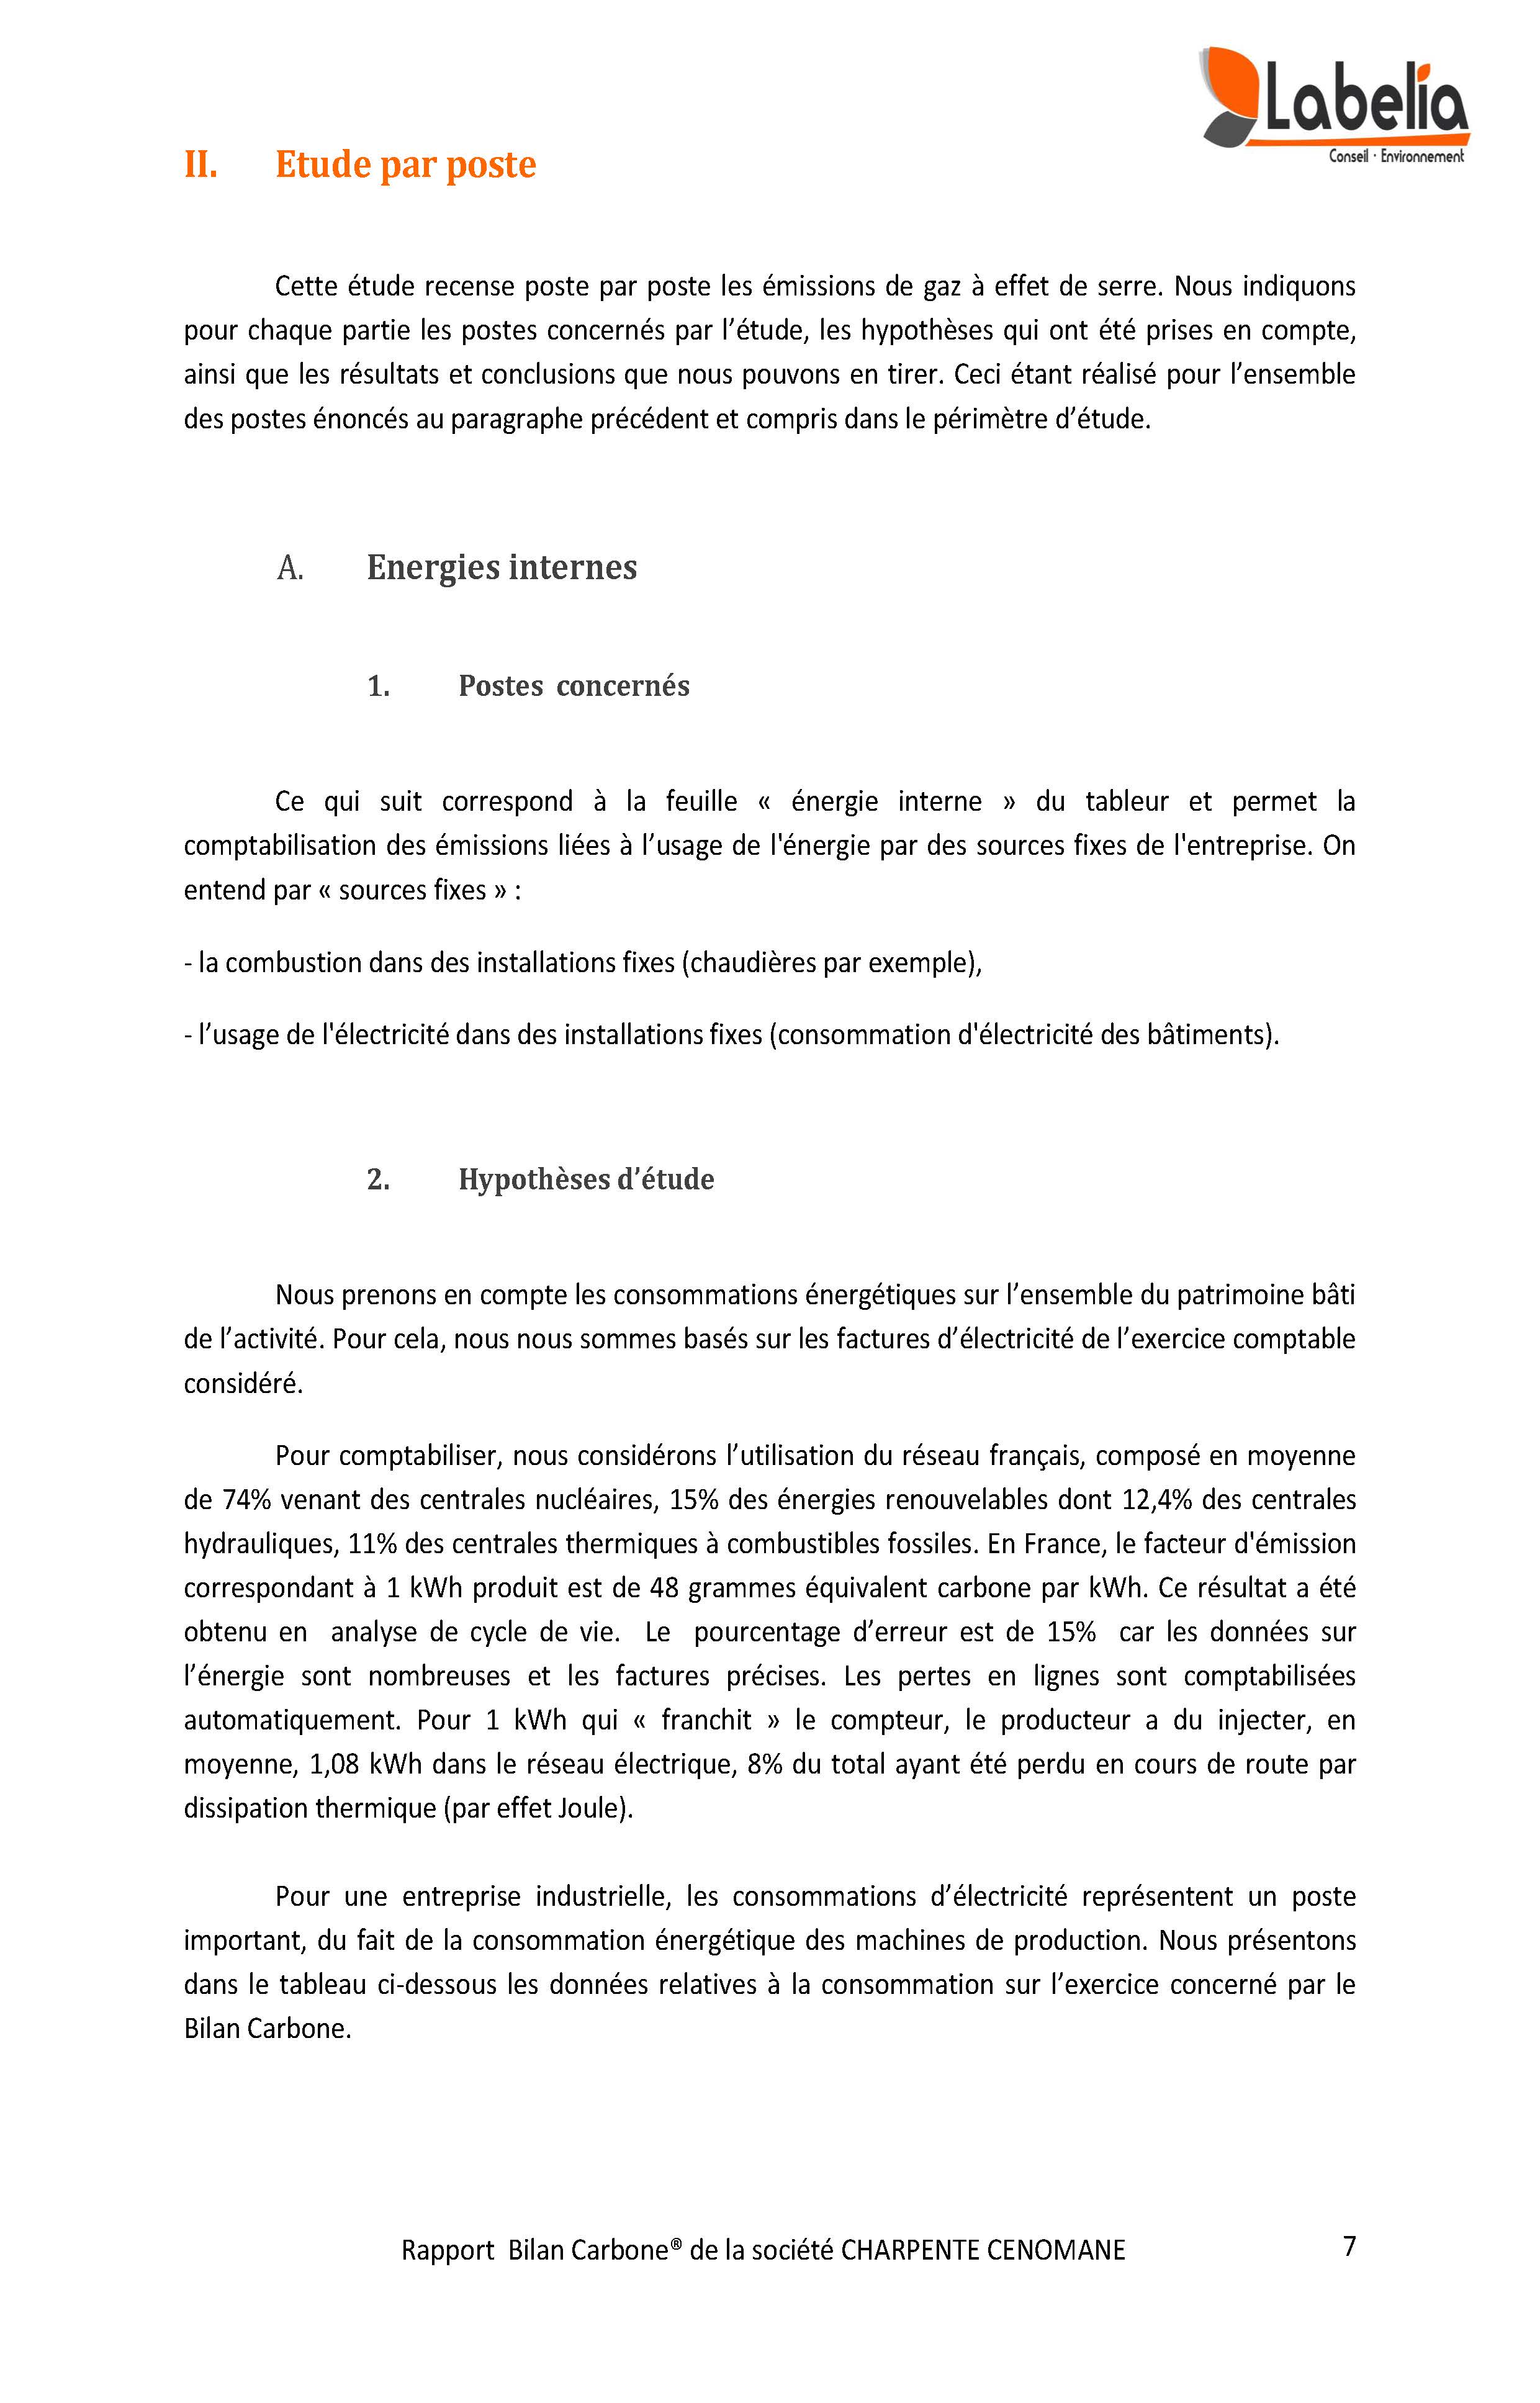 Rapport Bilan Carbone 2013 Page 07